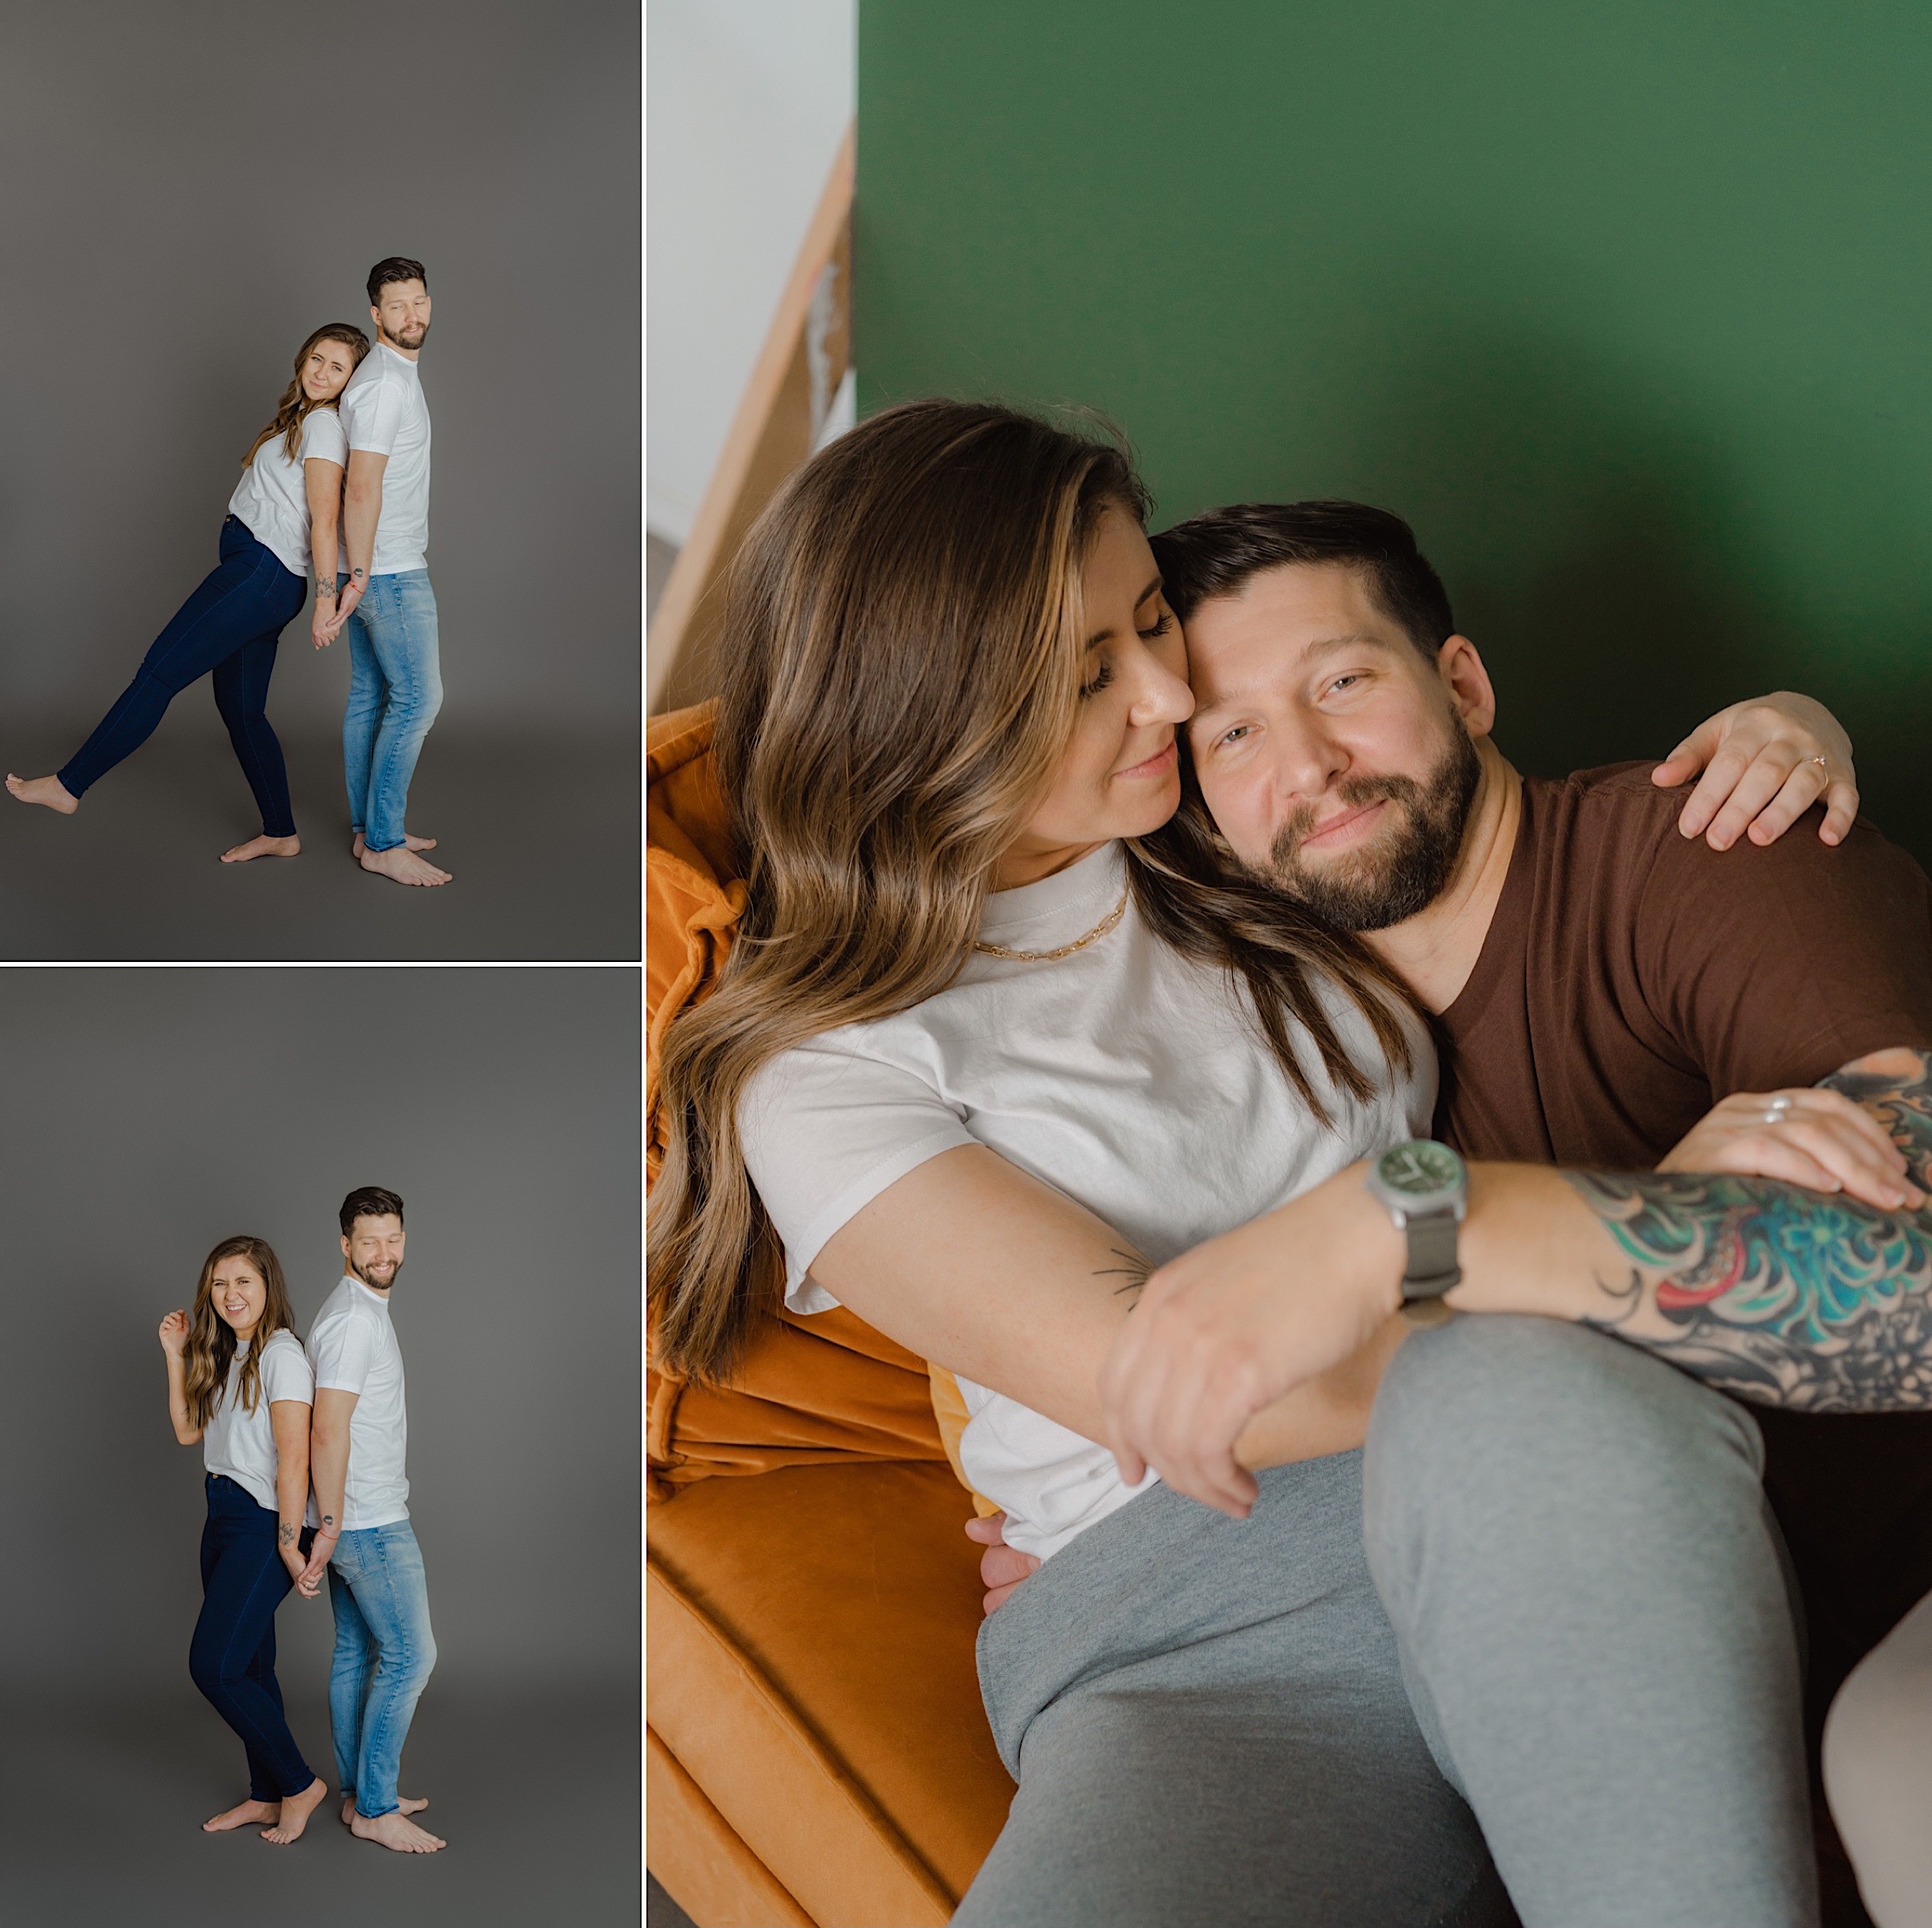 Minimalistic-Studio-Couple-Engagement-Session-White-Tshirts-neutral-charcoal-grey-backdrop-seattle-photographer